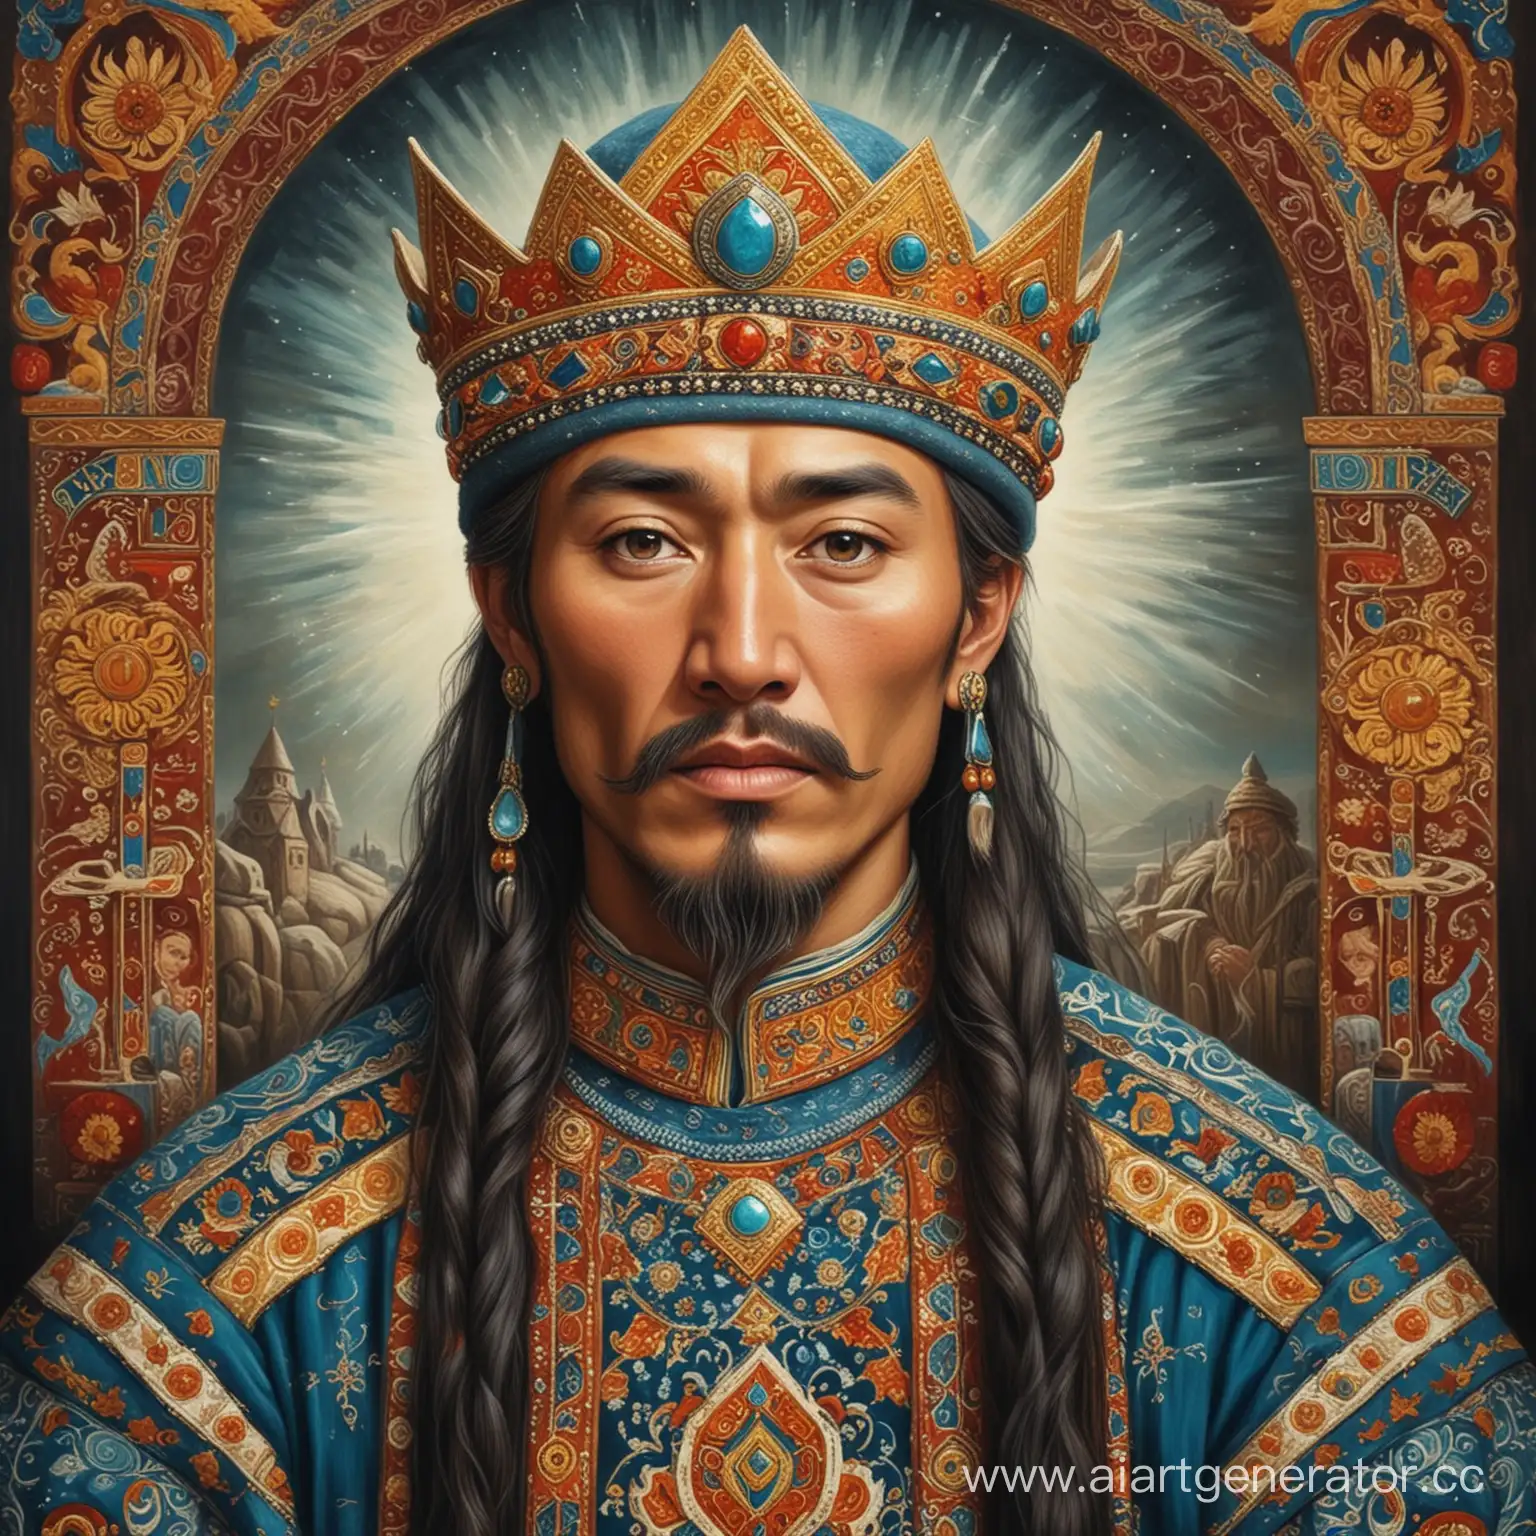 Kazakh-Folklore-Hero-Ertostik-as-King-of-the-Underground-Kingdom-in-Traditional-Attire